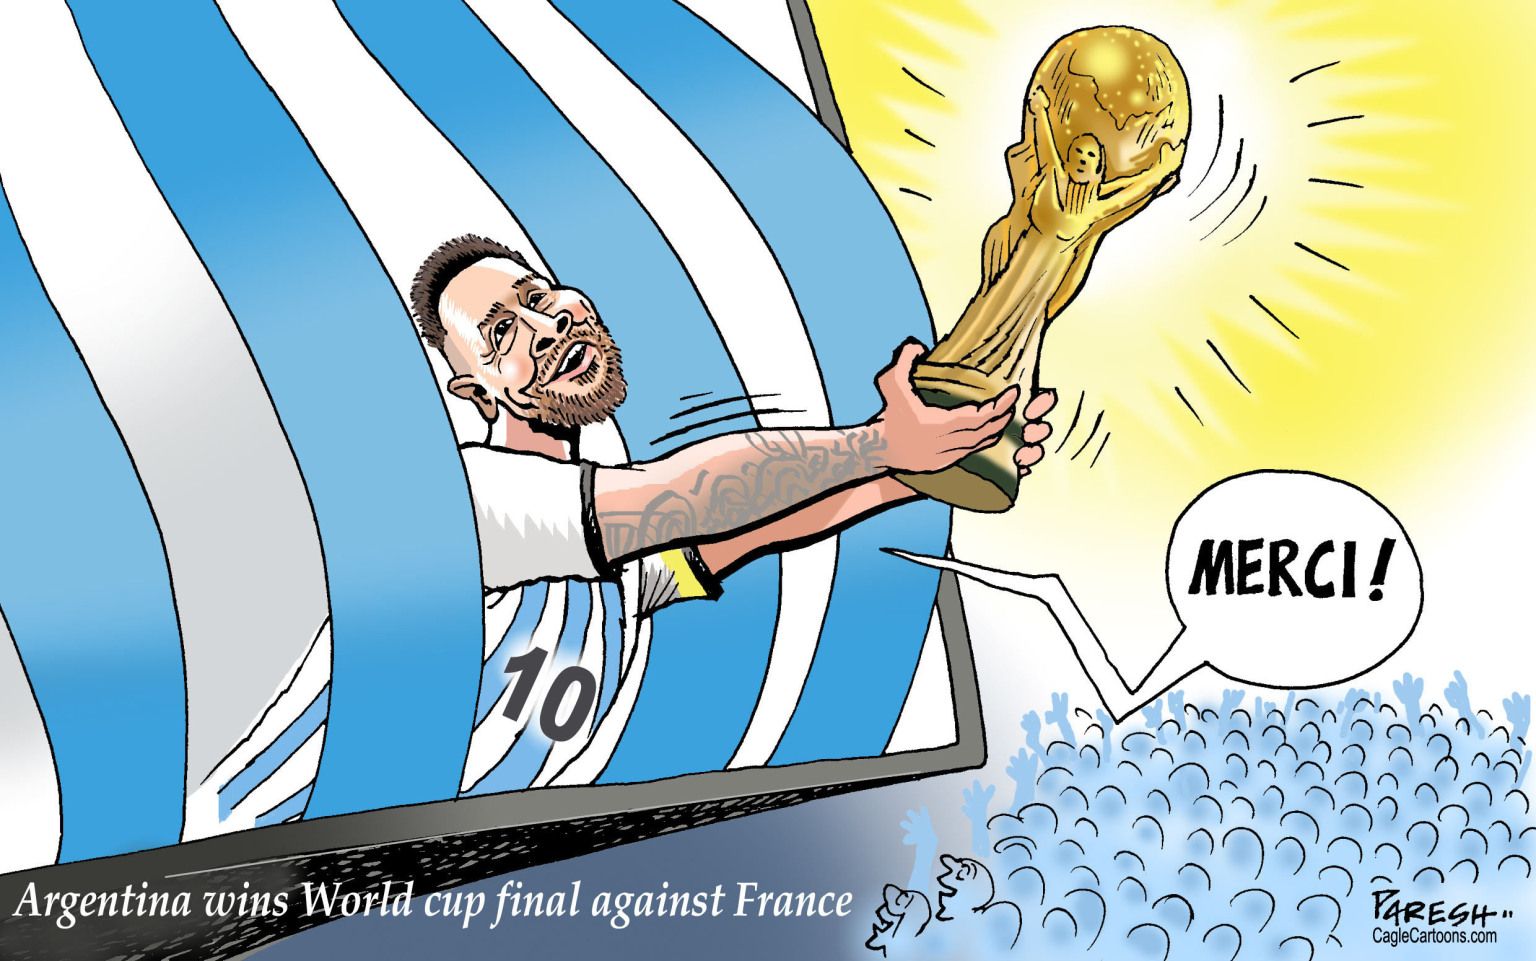 Argentina wins world cup - Editorial Cartoon